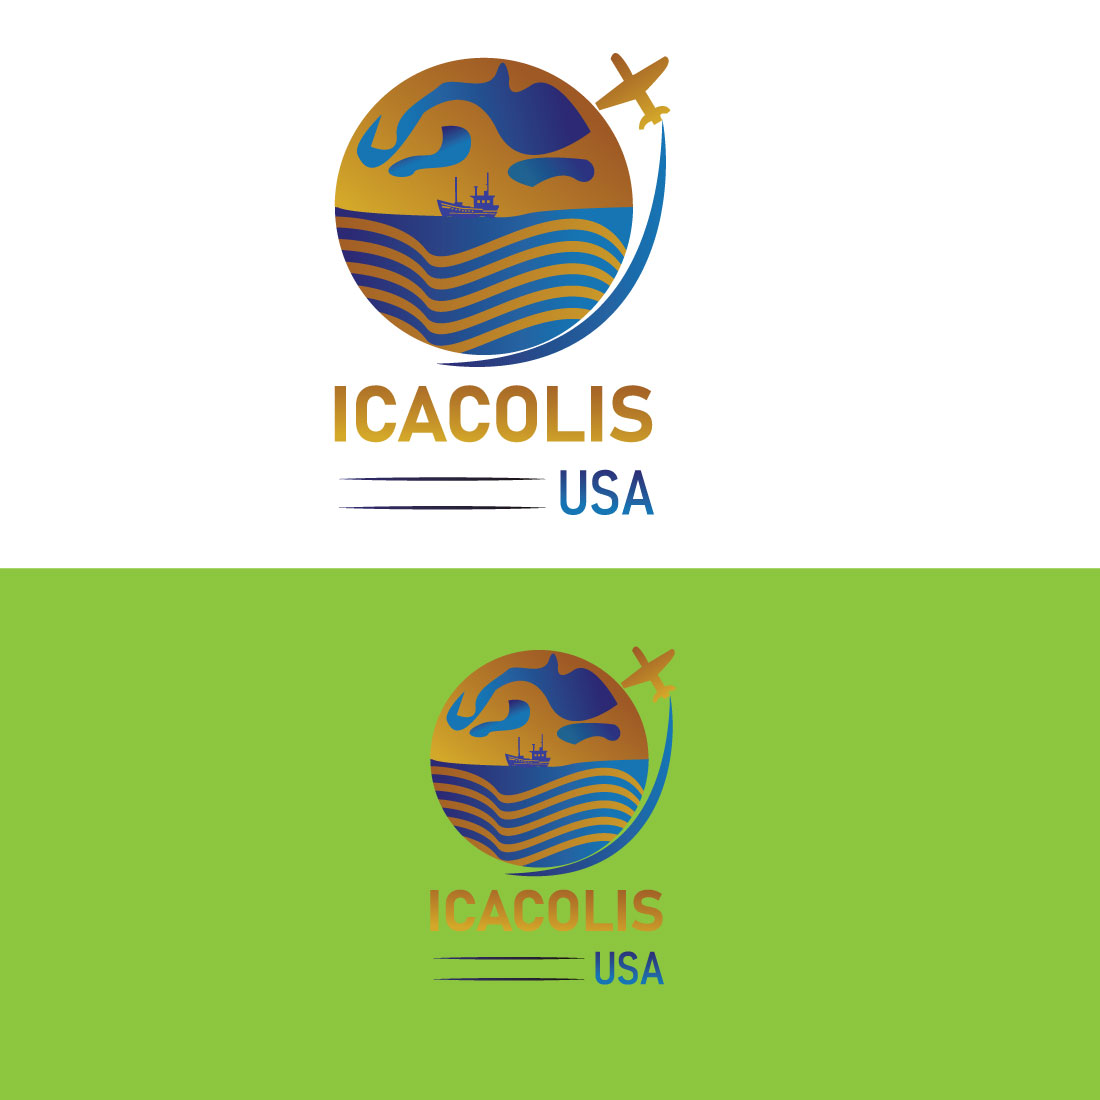 ICACOLIS USA logo preview image.